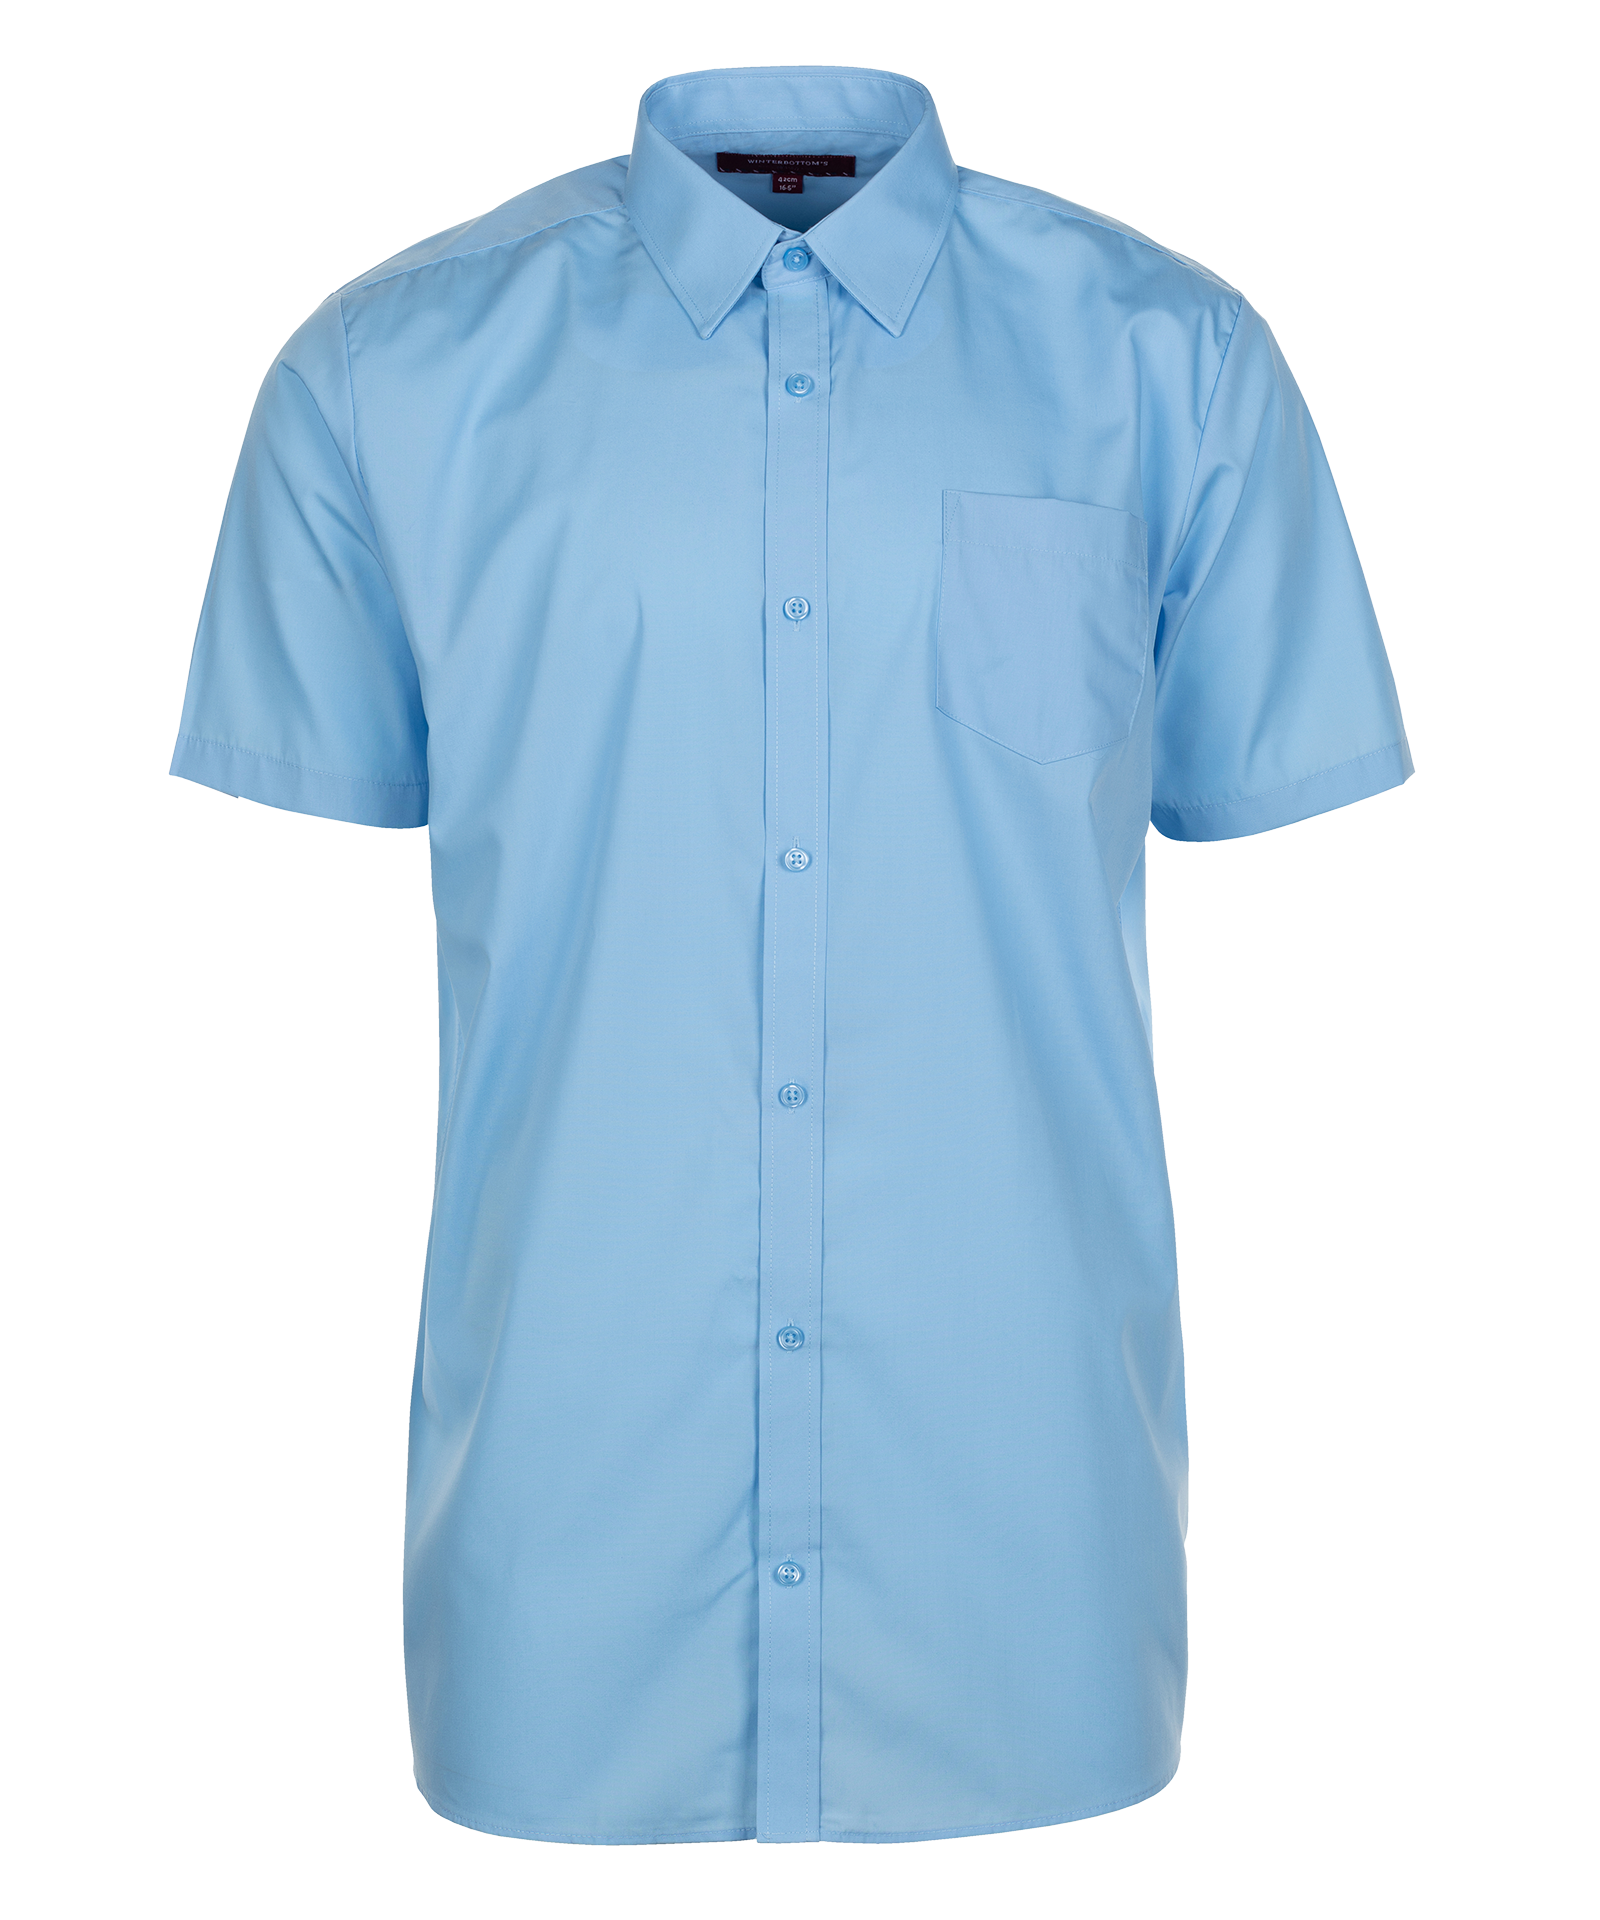 Unisex Short Sleeve School Shirt - Twin Pack